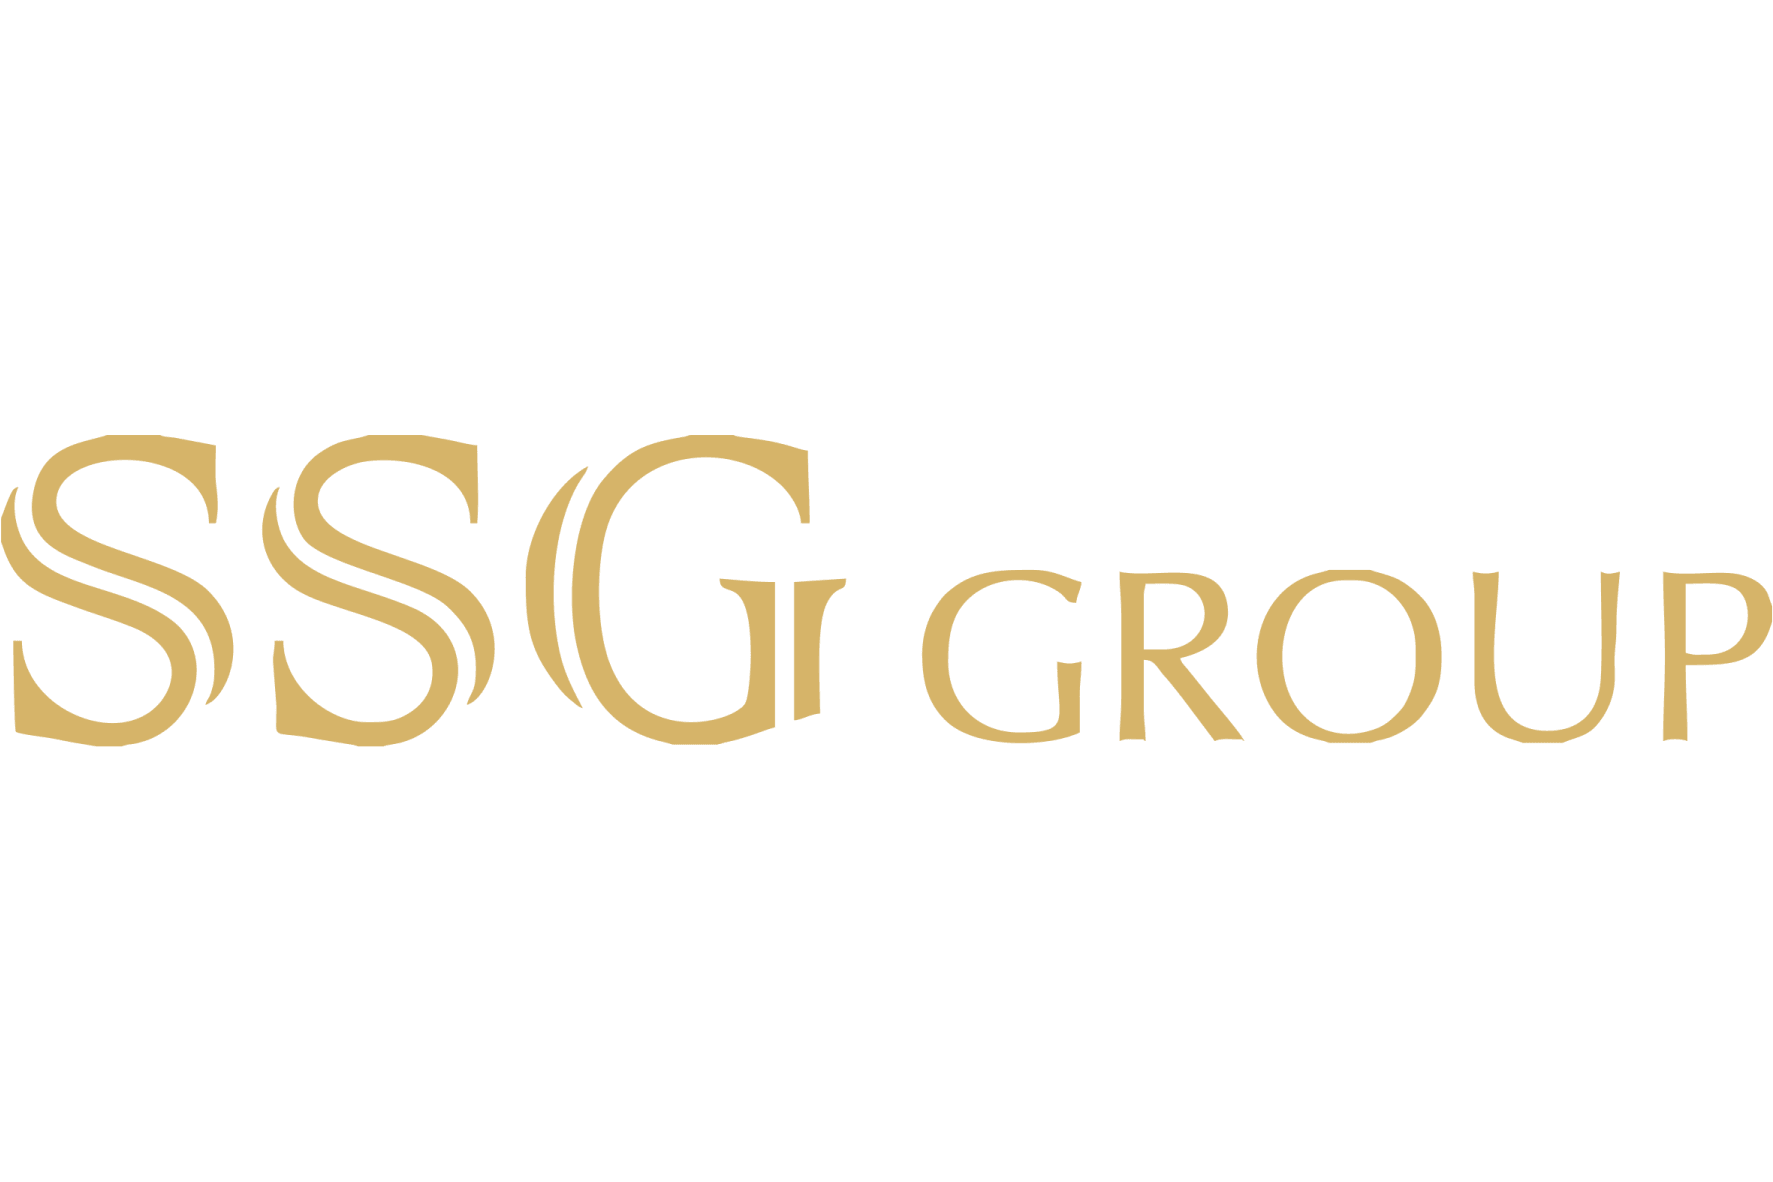 SSG Group